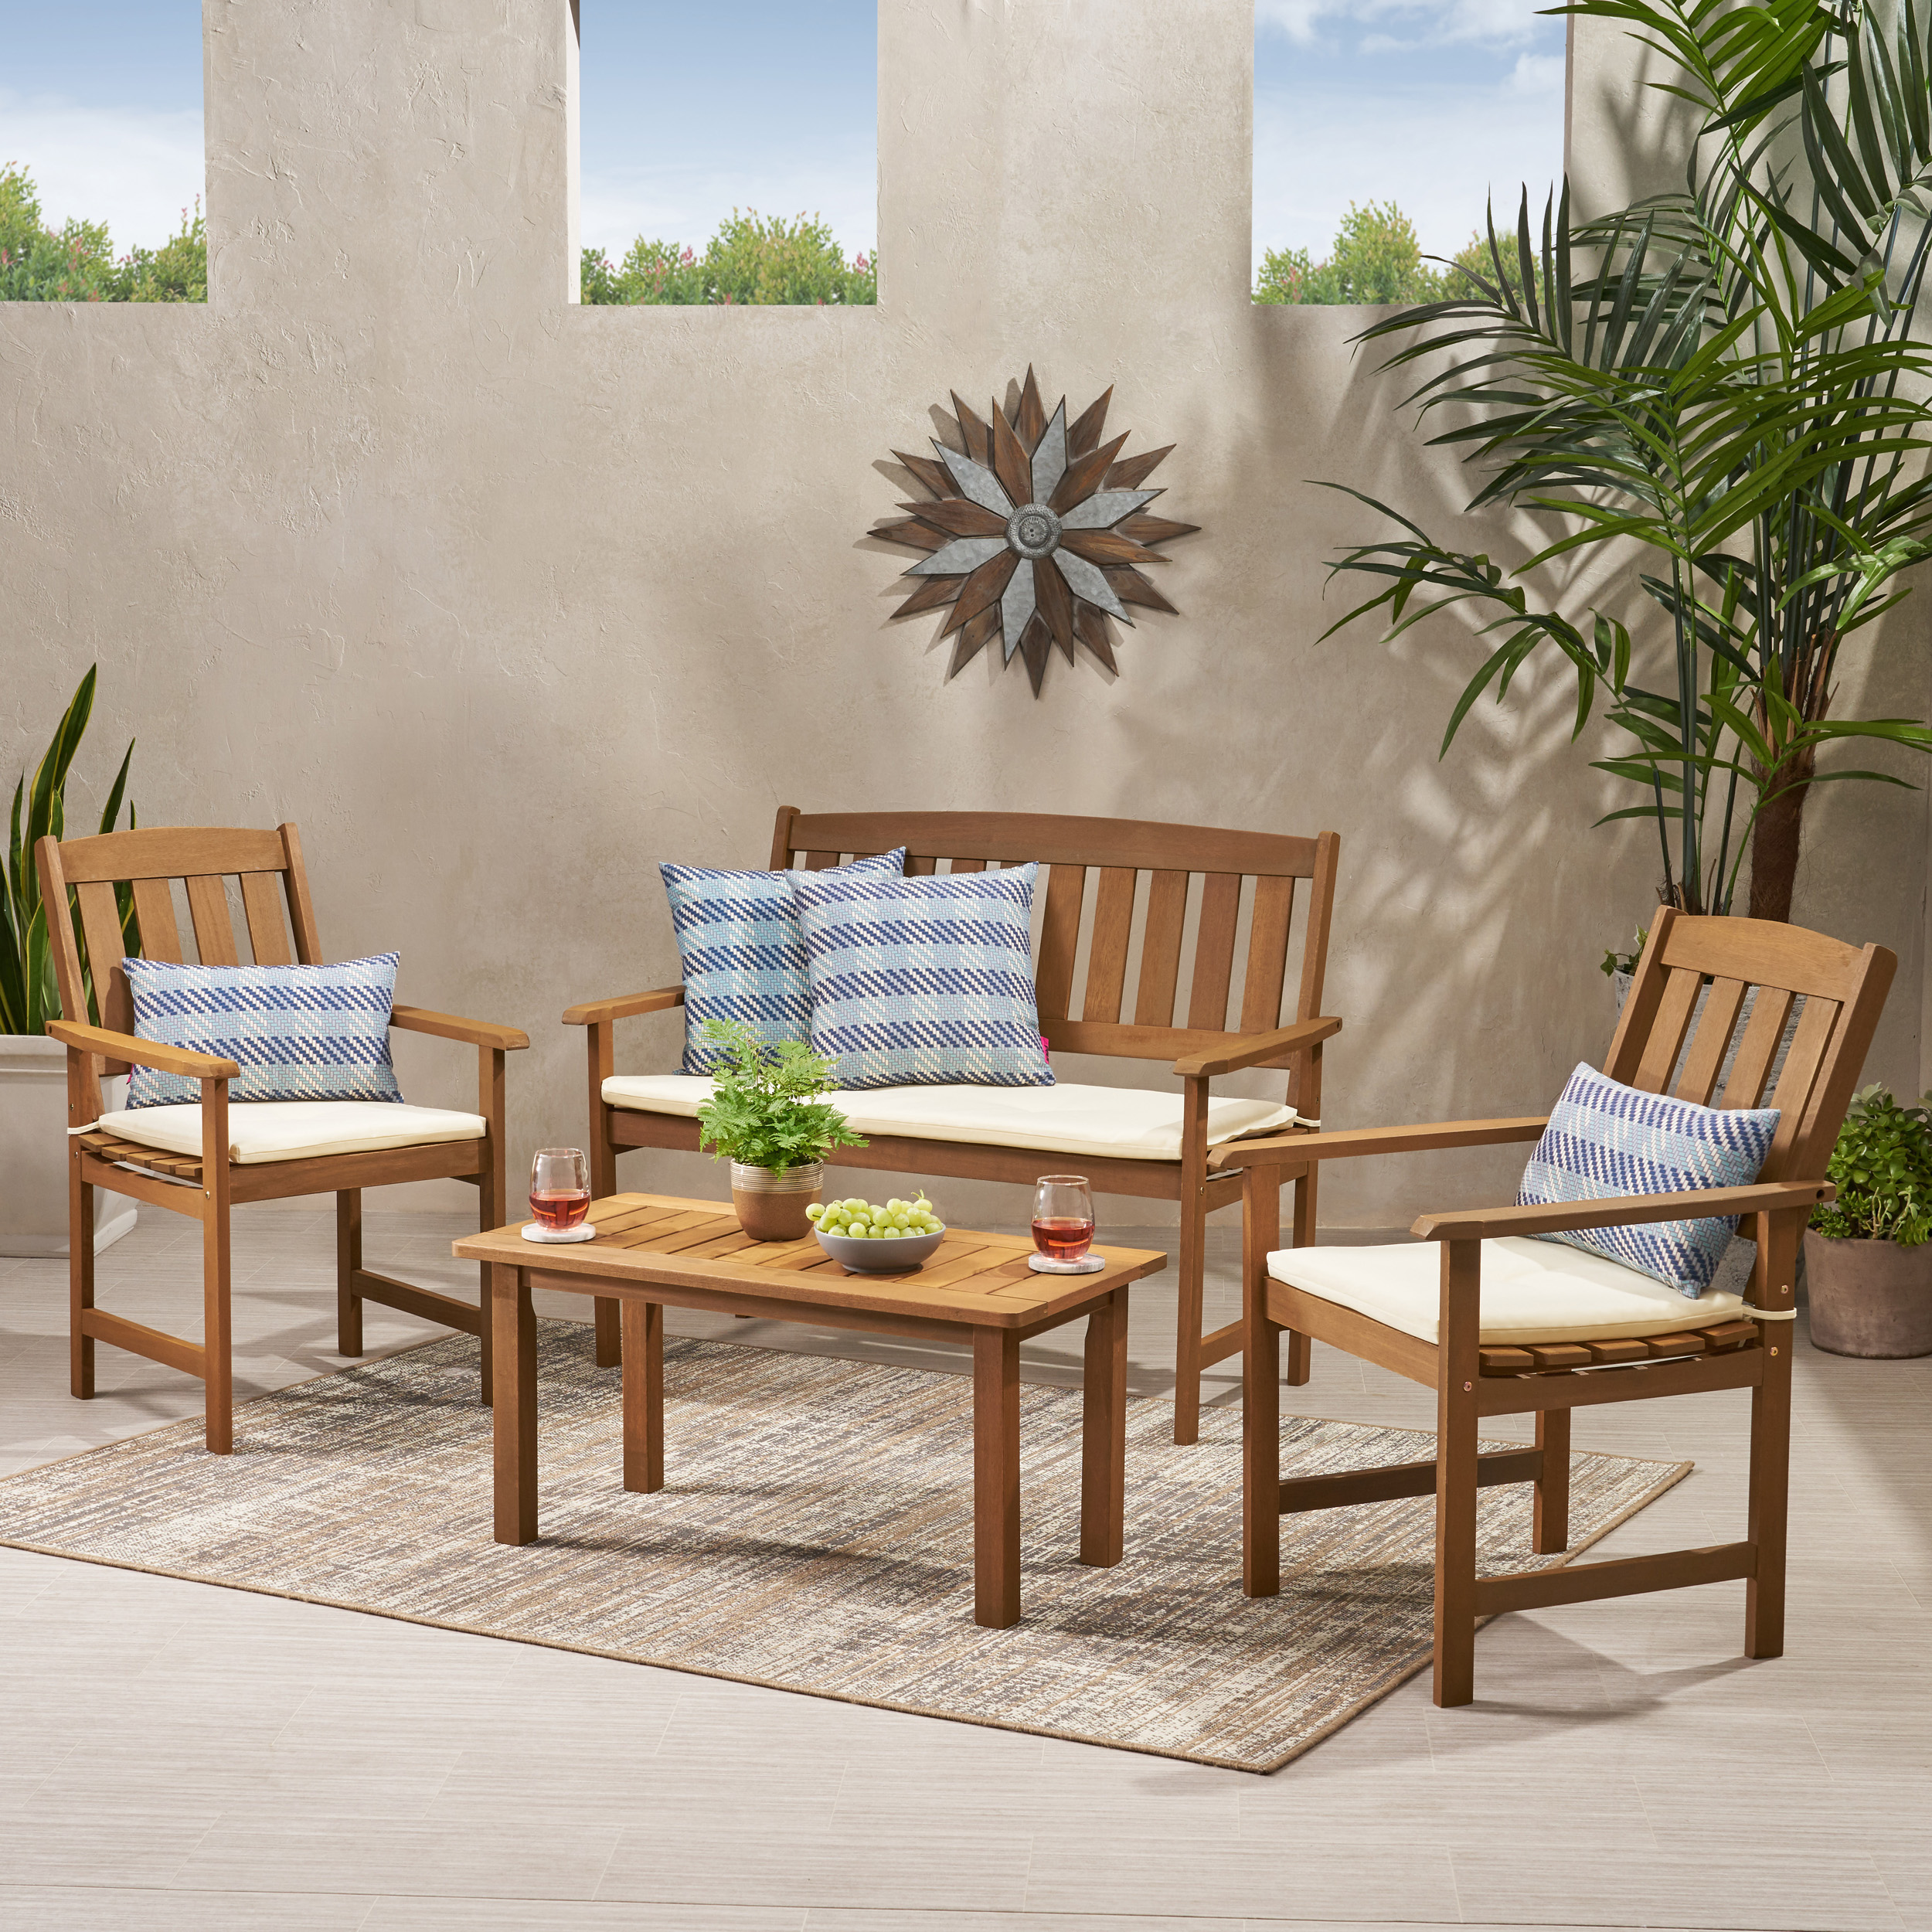 Emilia Outdoor Meranti 4 piece Wood Chat Set with Cushions, Honey Oak, Cream - image 1 of 8